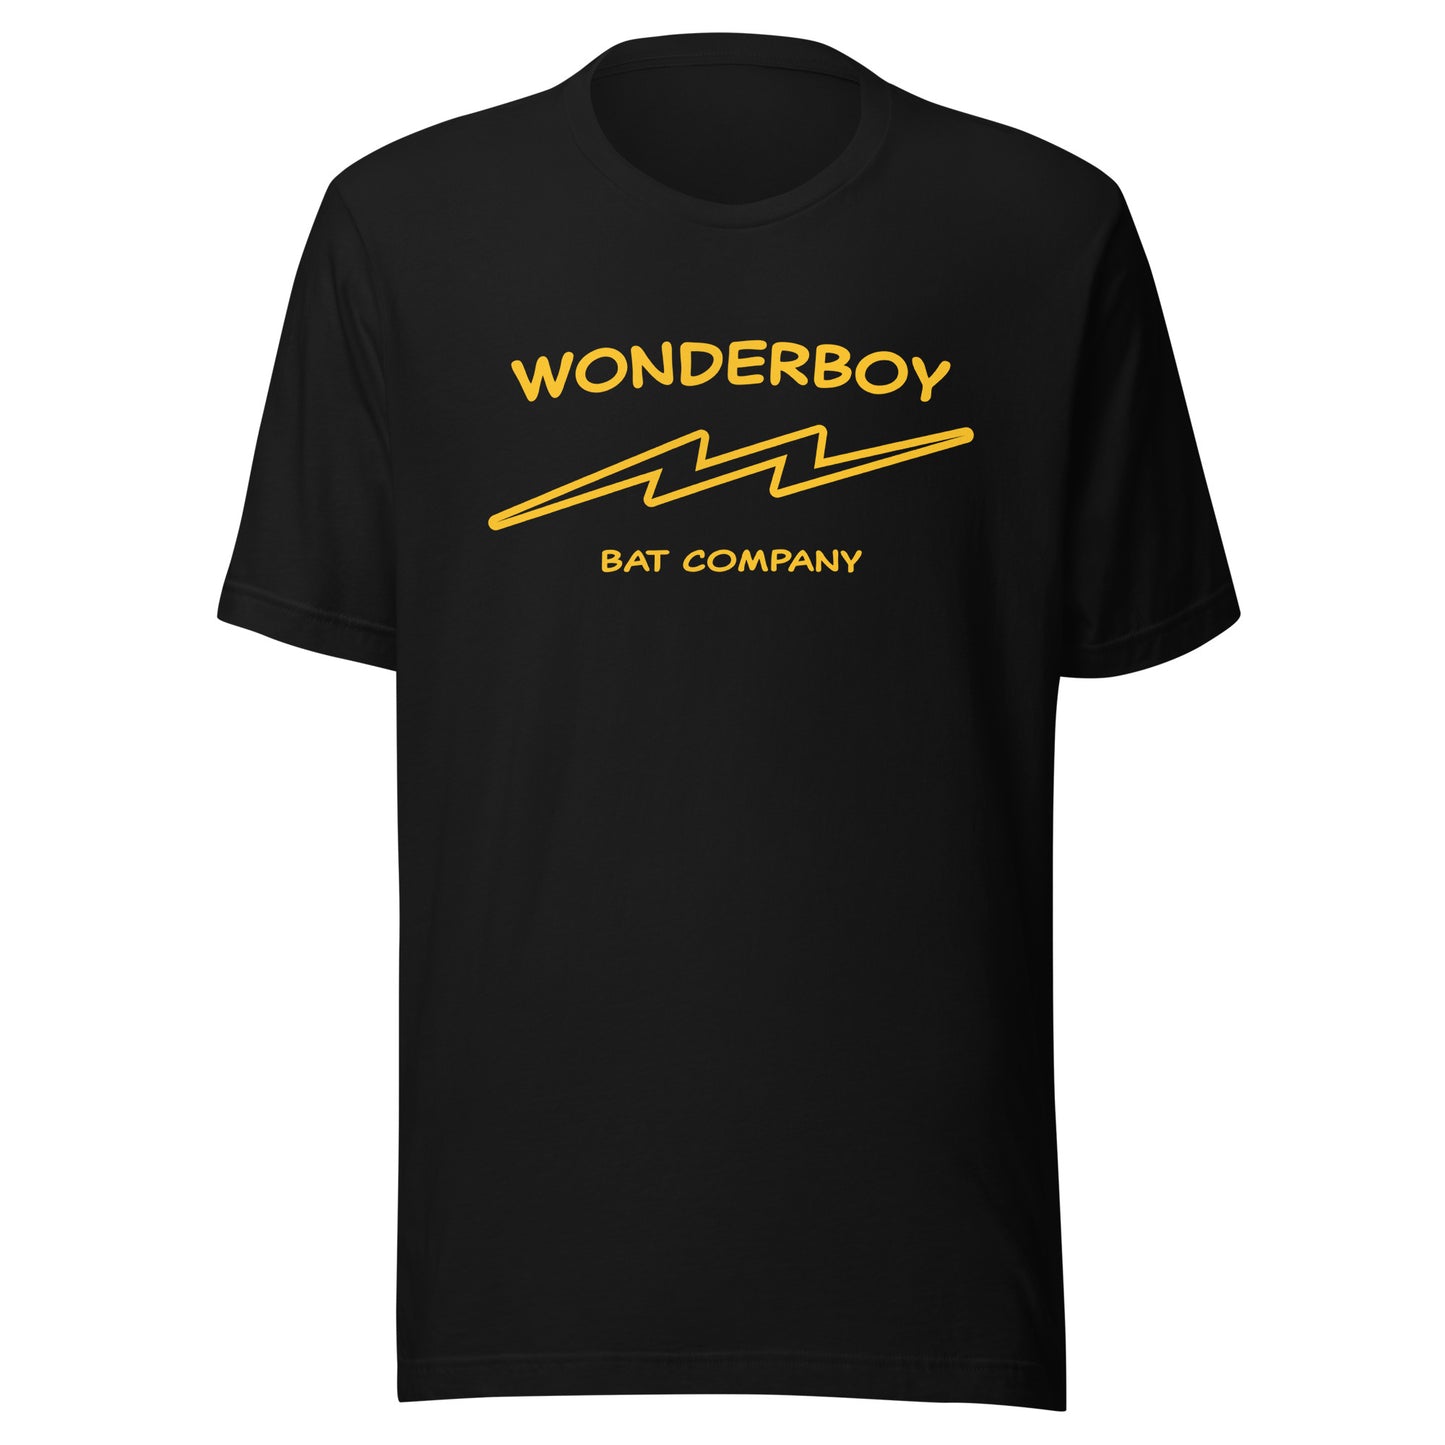 Wonderboy Bat Co T-Shirt - Classic 80s Movie Natural Tee